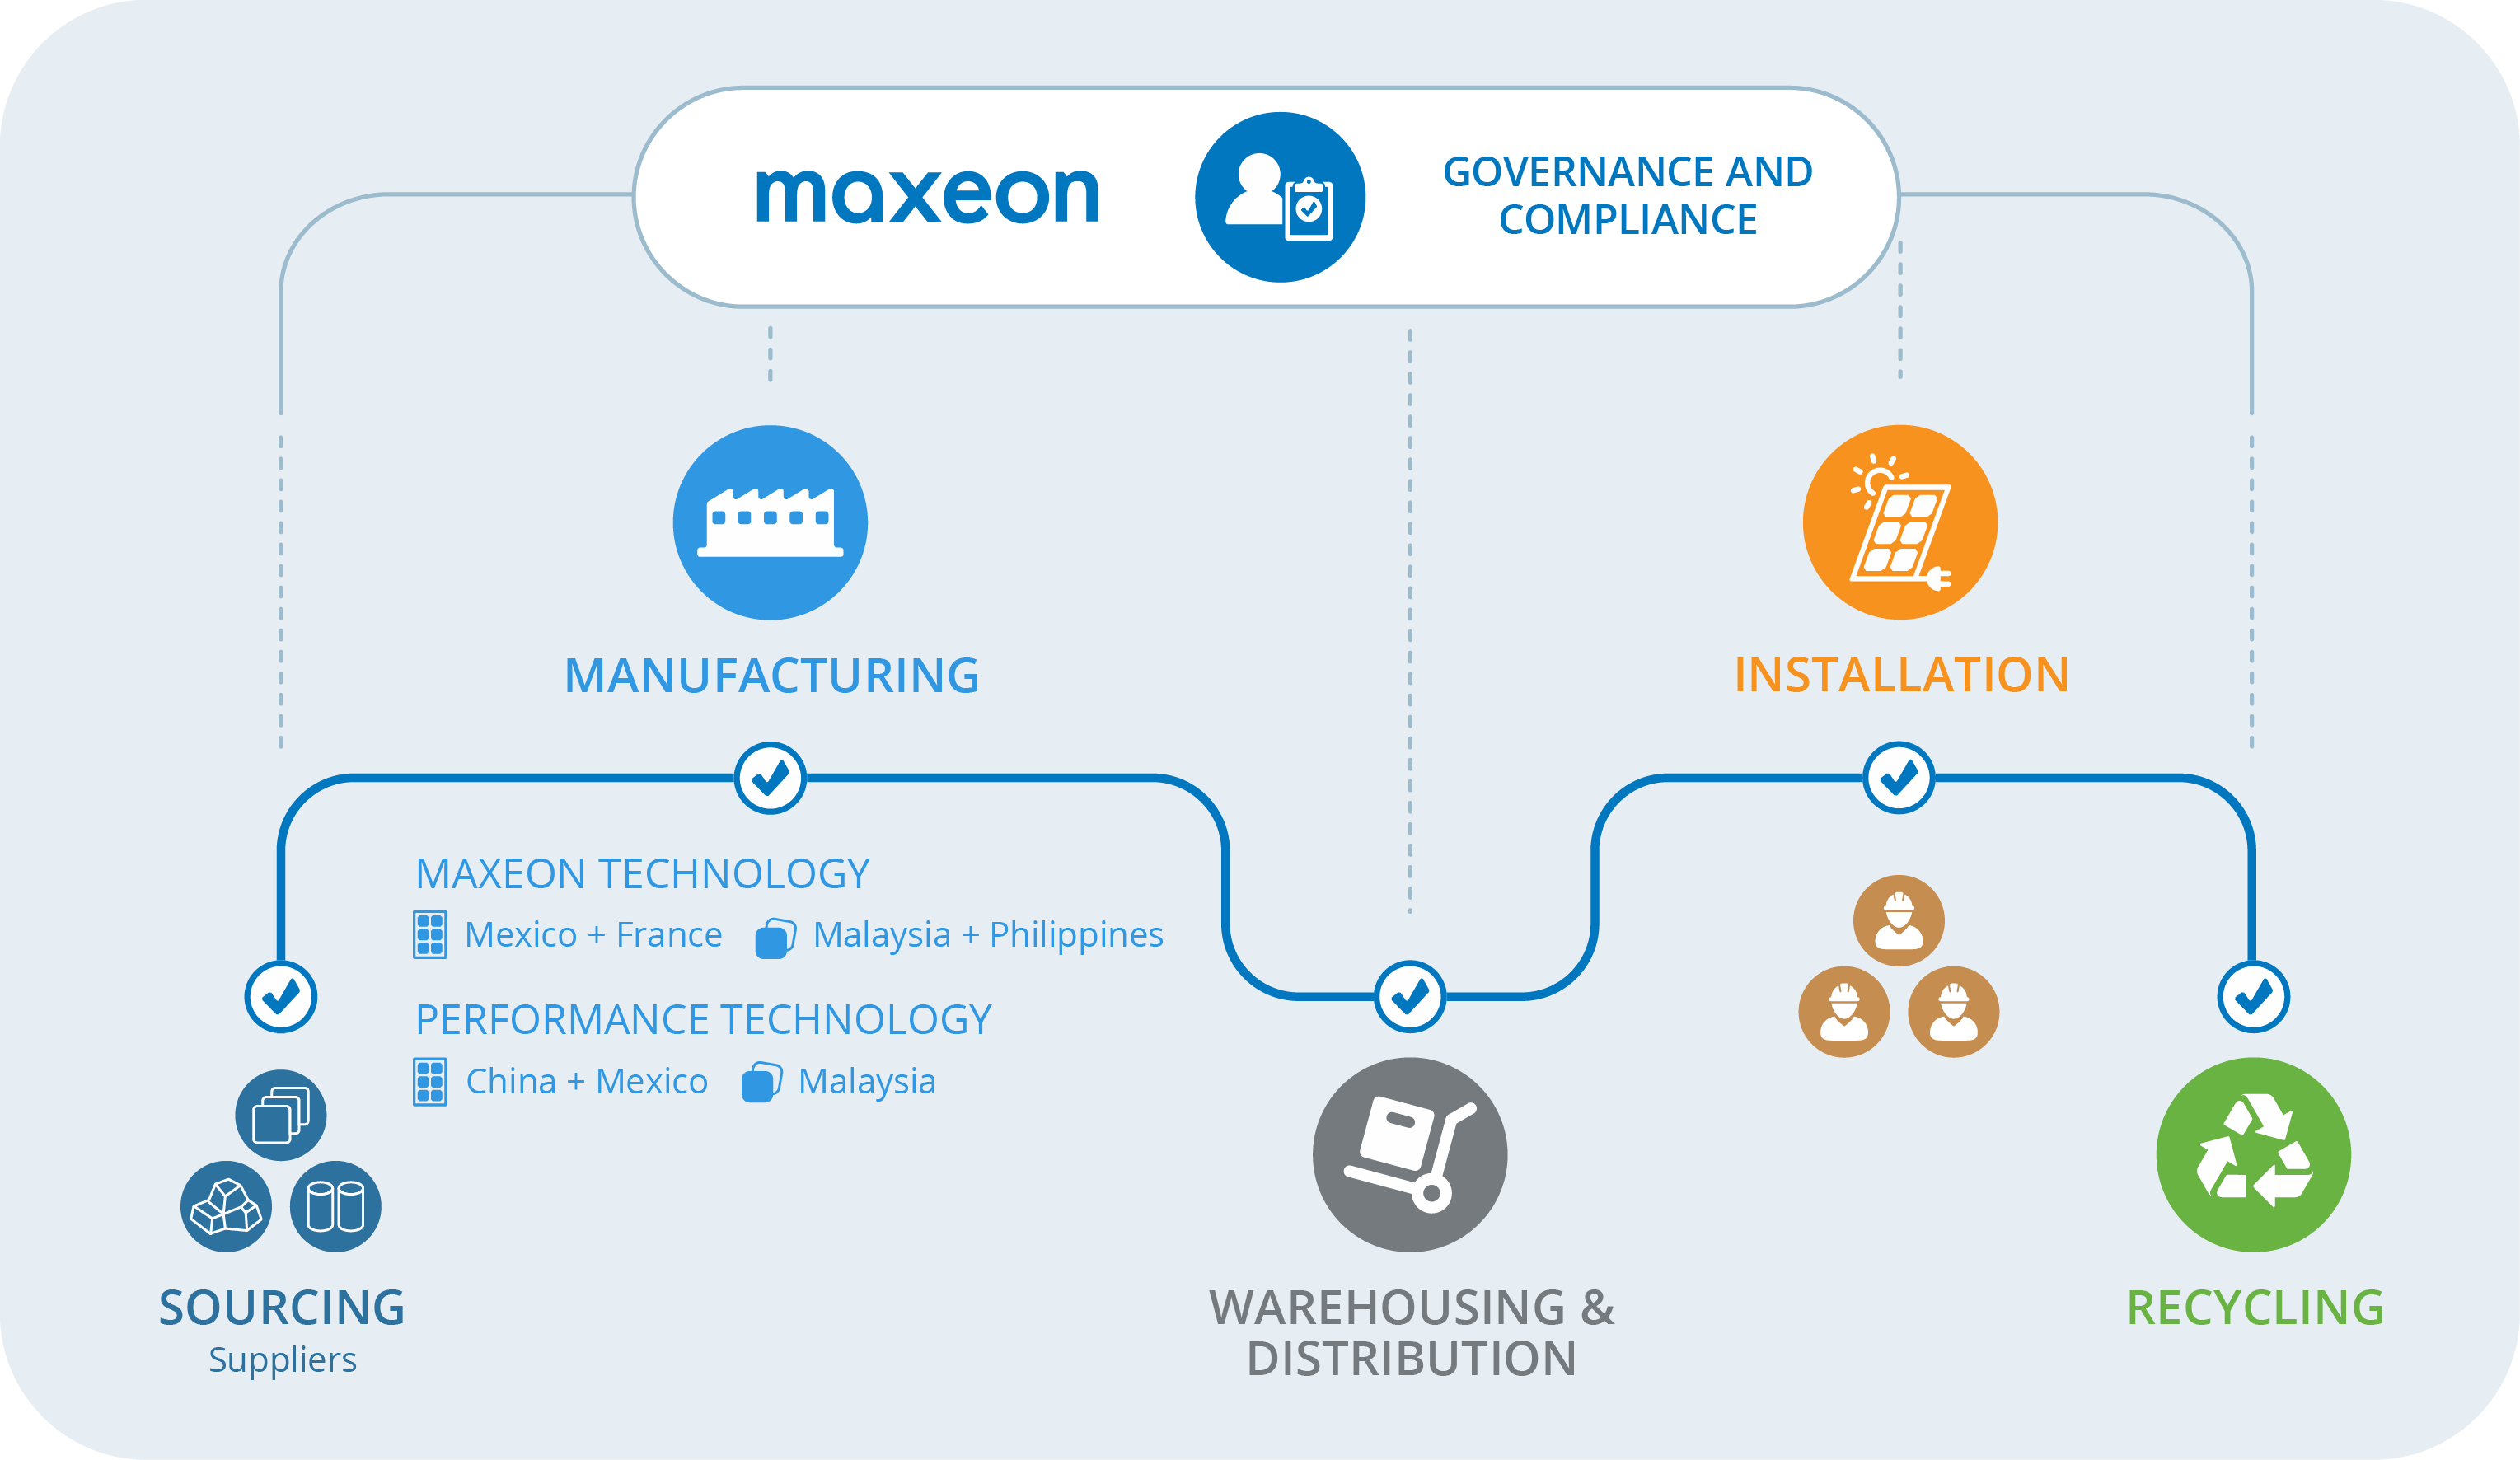 Maxeon Governance Compliance Approach